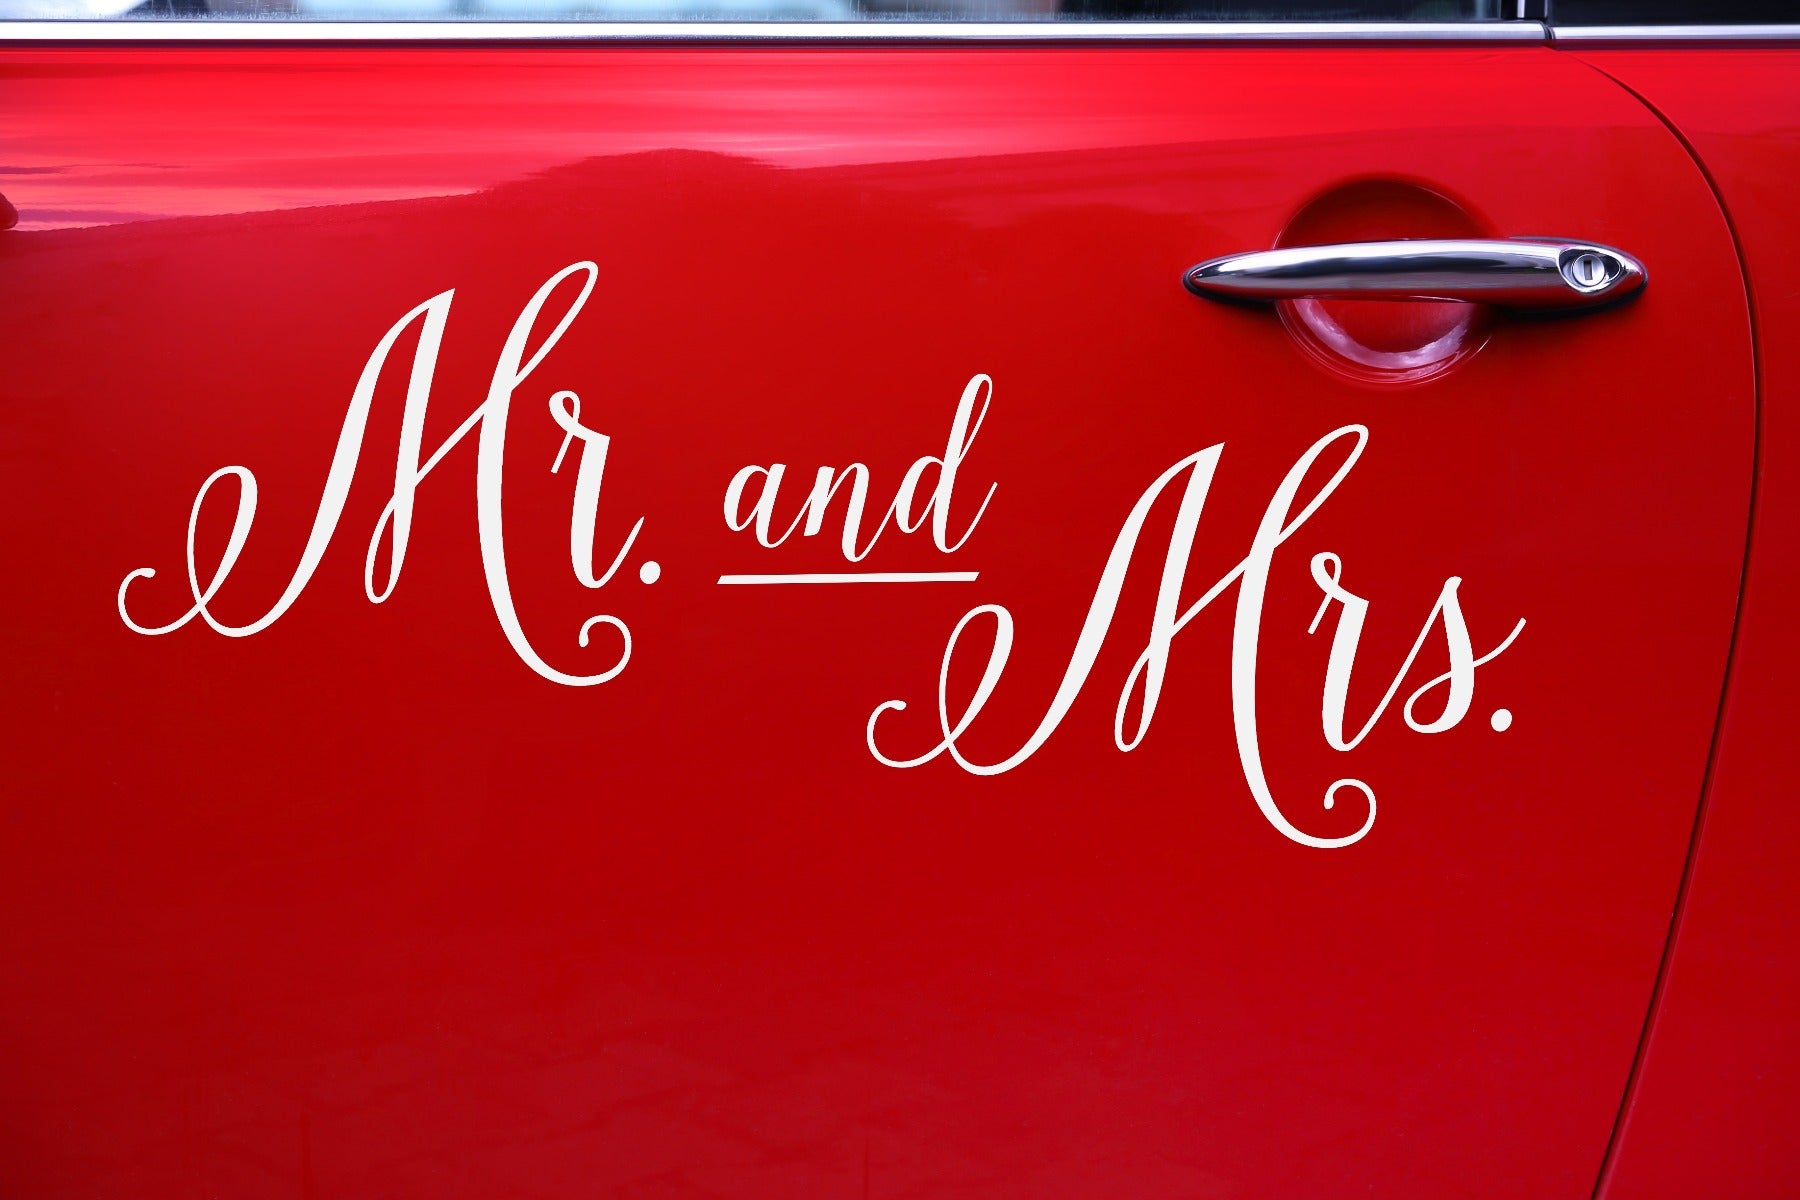 Mr & Mrs wedding Sticker for car